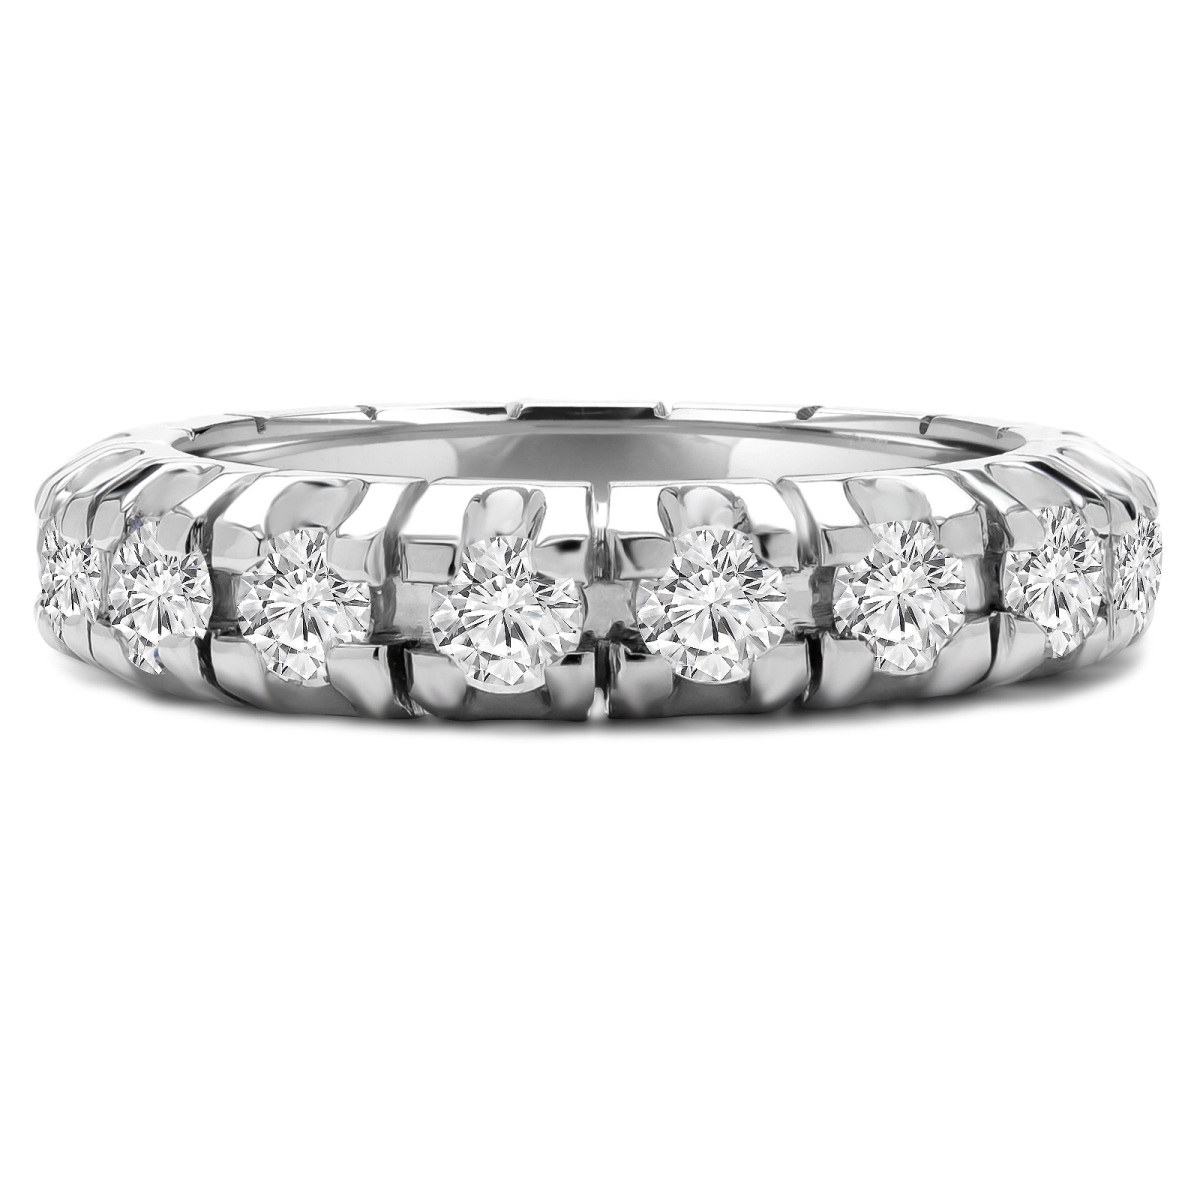 Great Gems 3.33 CTW Round Diamond Full-Eternity Anniversary Wedding Band Ring in 18K White Gold - Size 3.5